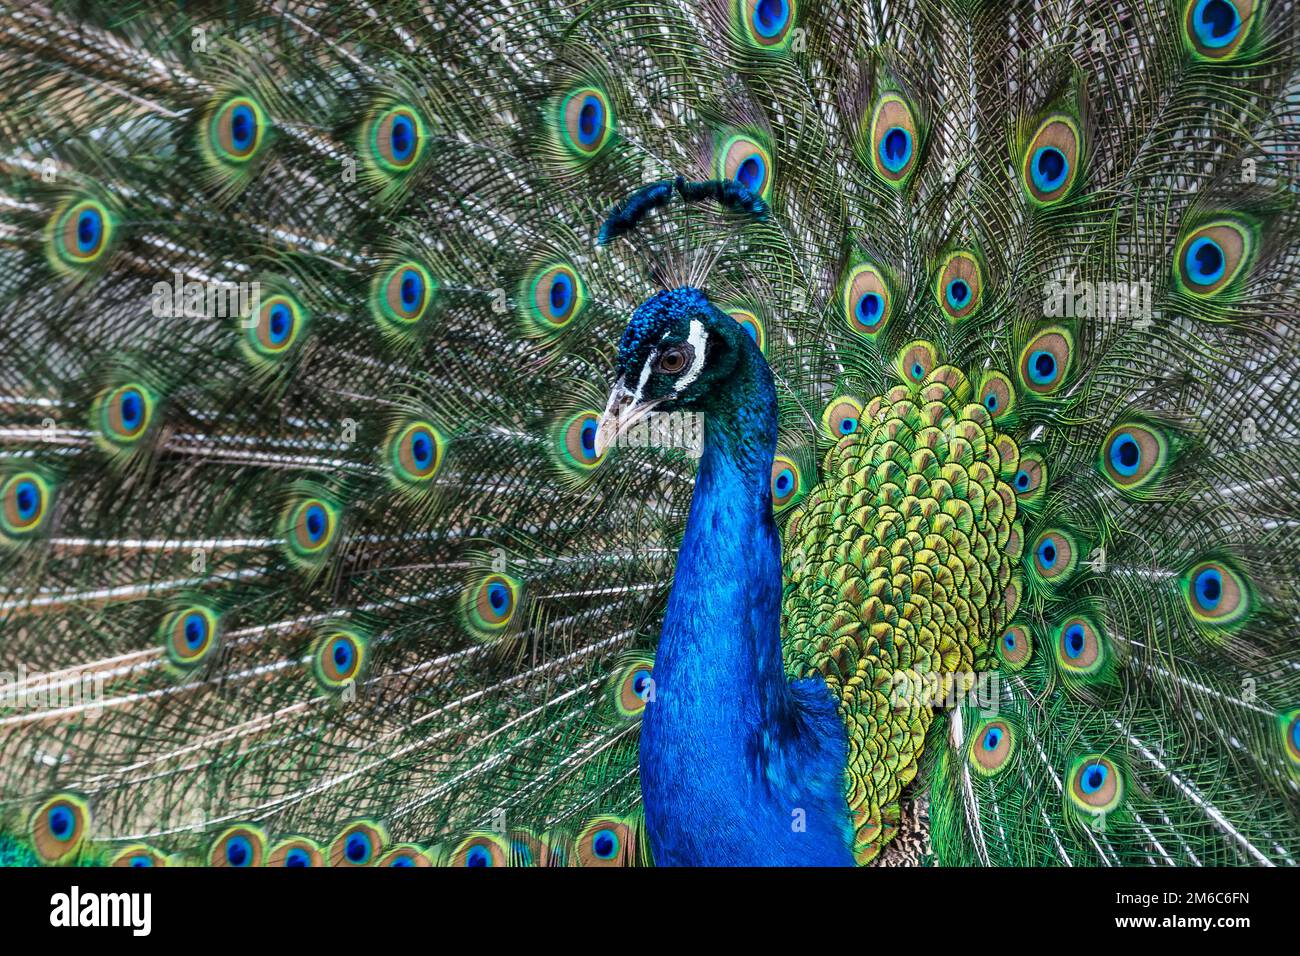 Peacock avec plumes multicolores. Monde animal sauvage. Banque D'Images